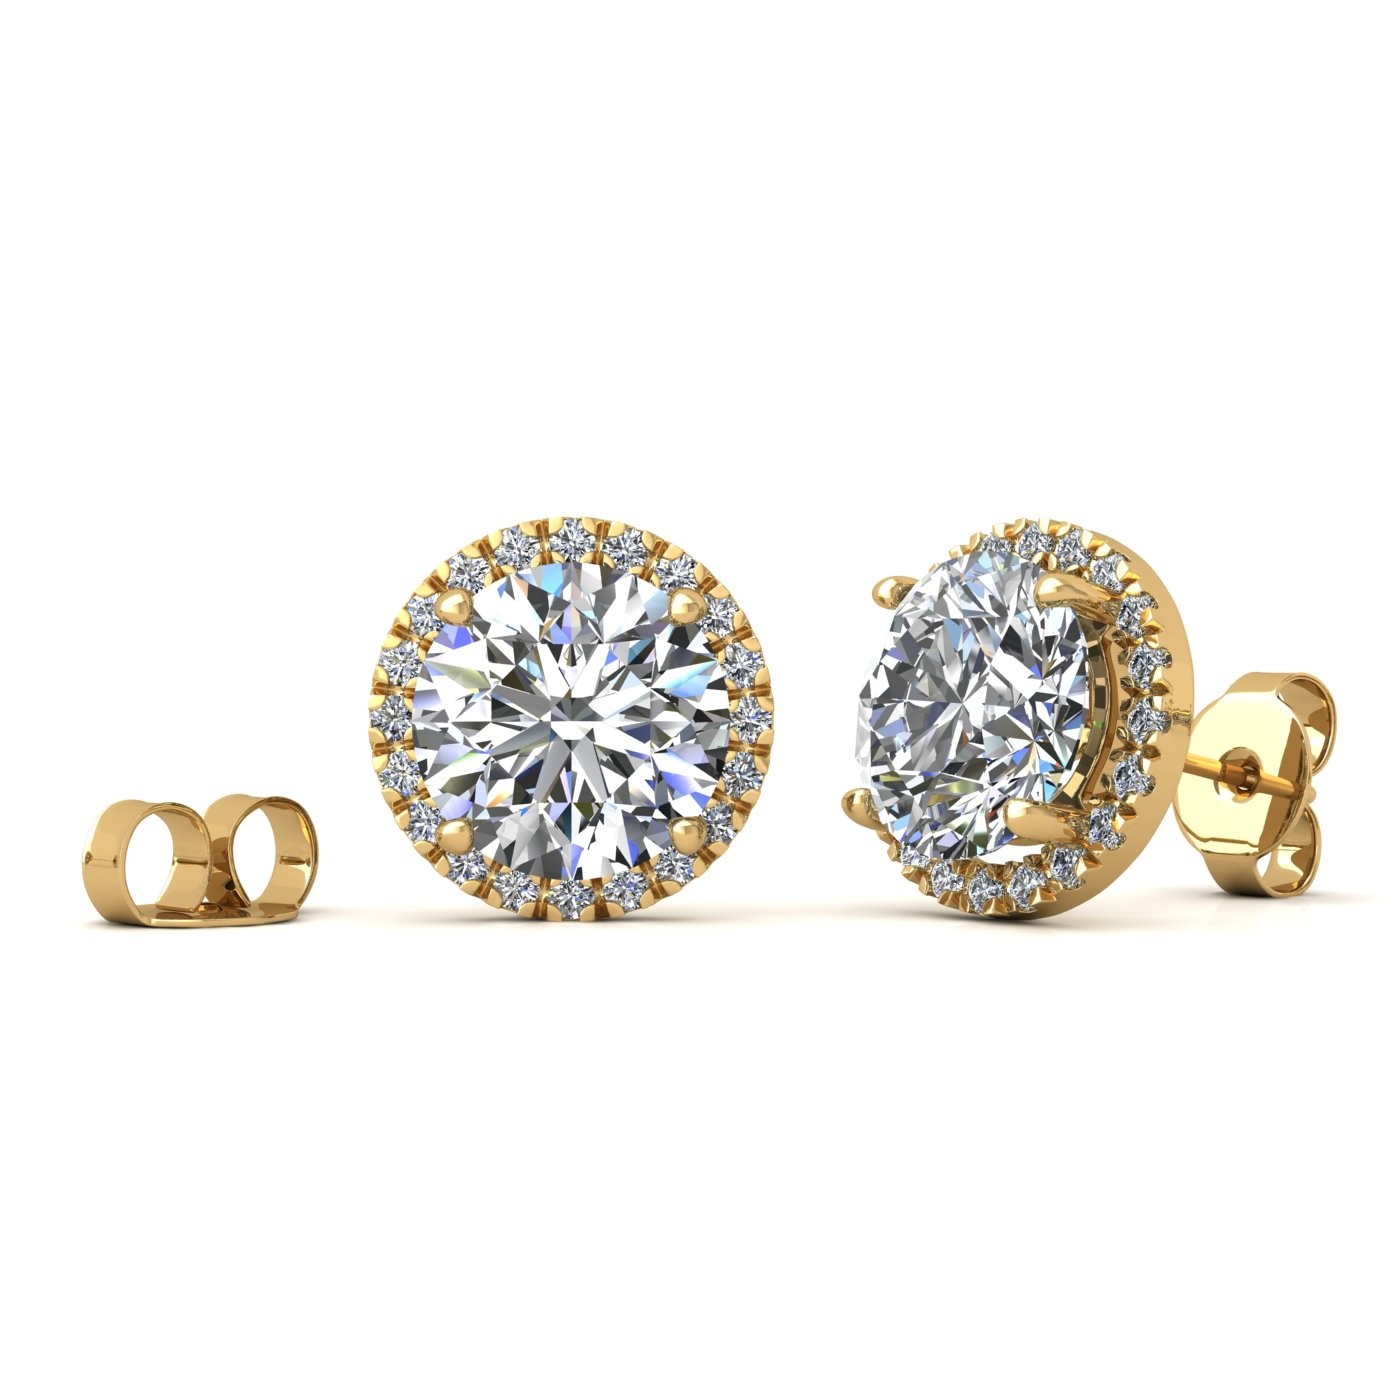 18k yellow gold  0,3 ct each (0,6 tcw) 4 prongs round shape diamond earrings with diamond pavÉ set halo Photos & images